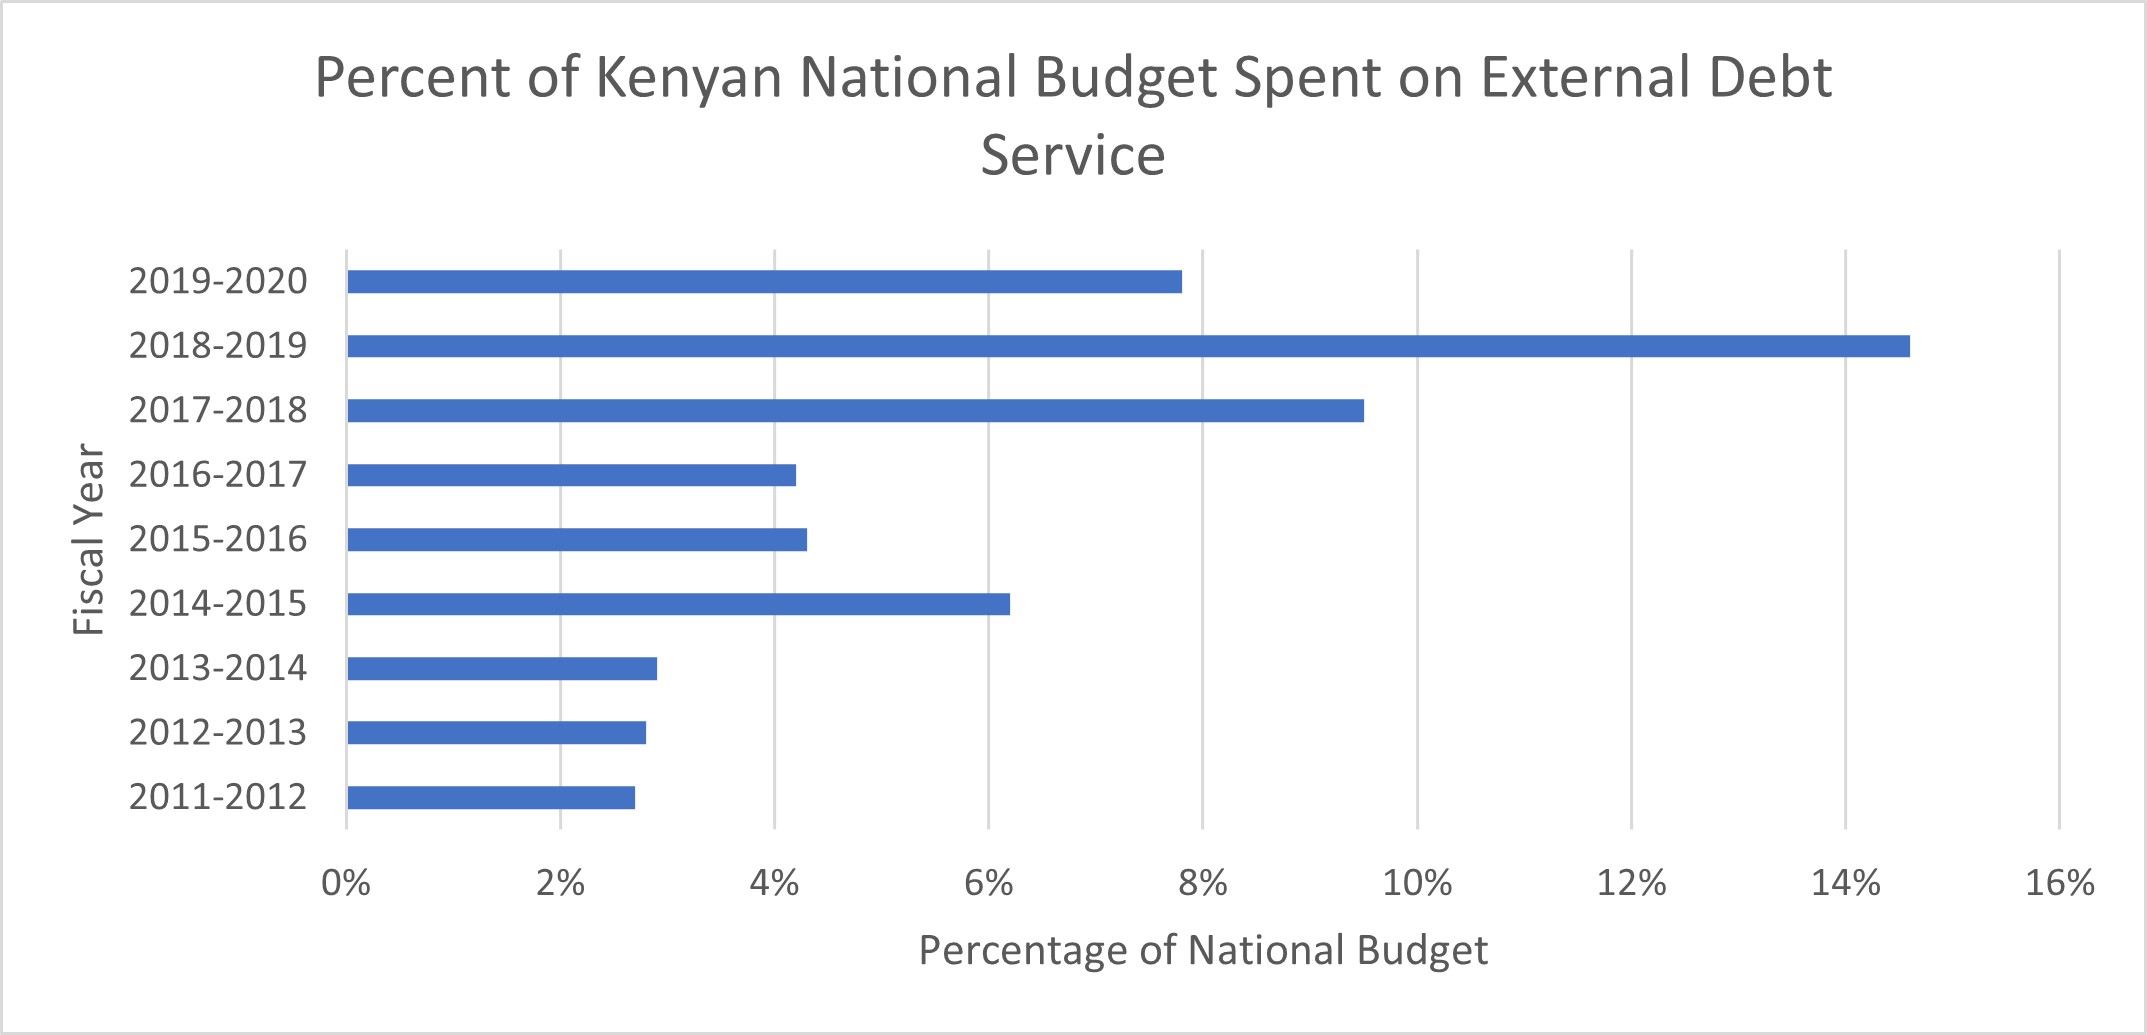 Source: Kenya Annual Public Debt Management Reports